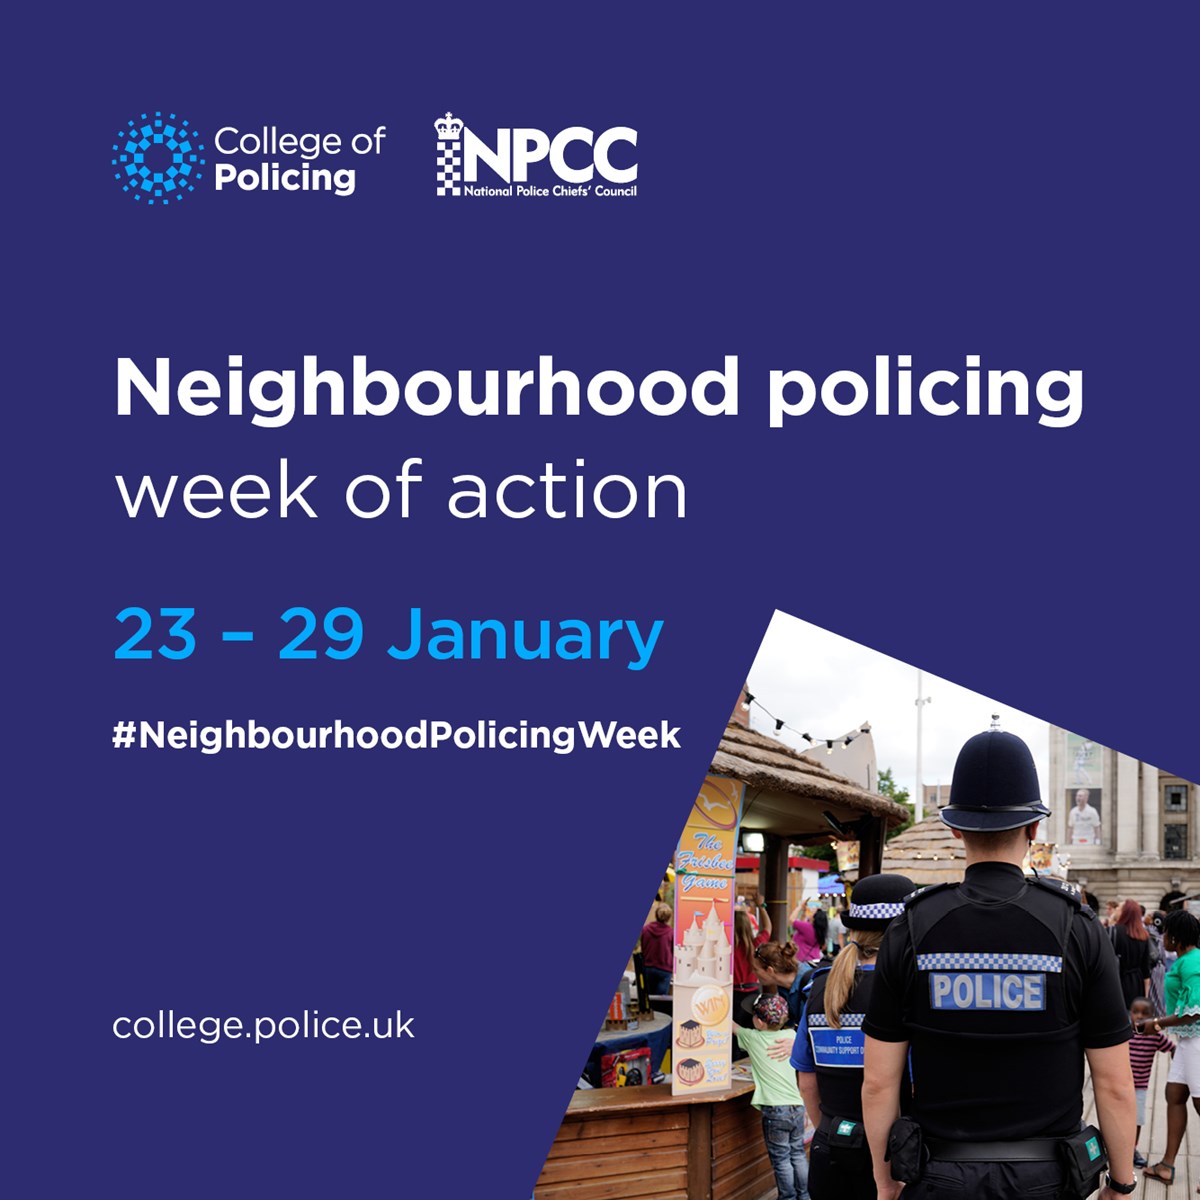 Neighbourhood-policing-week-of-action-1334-1334